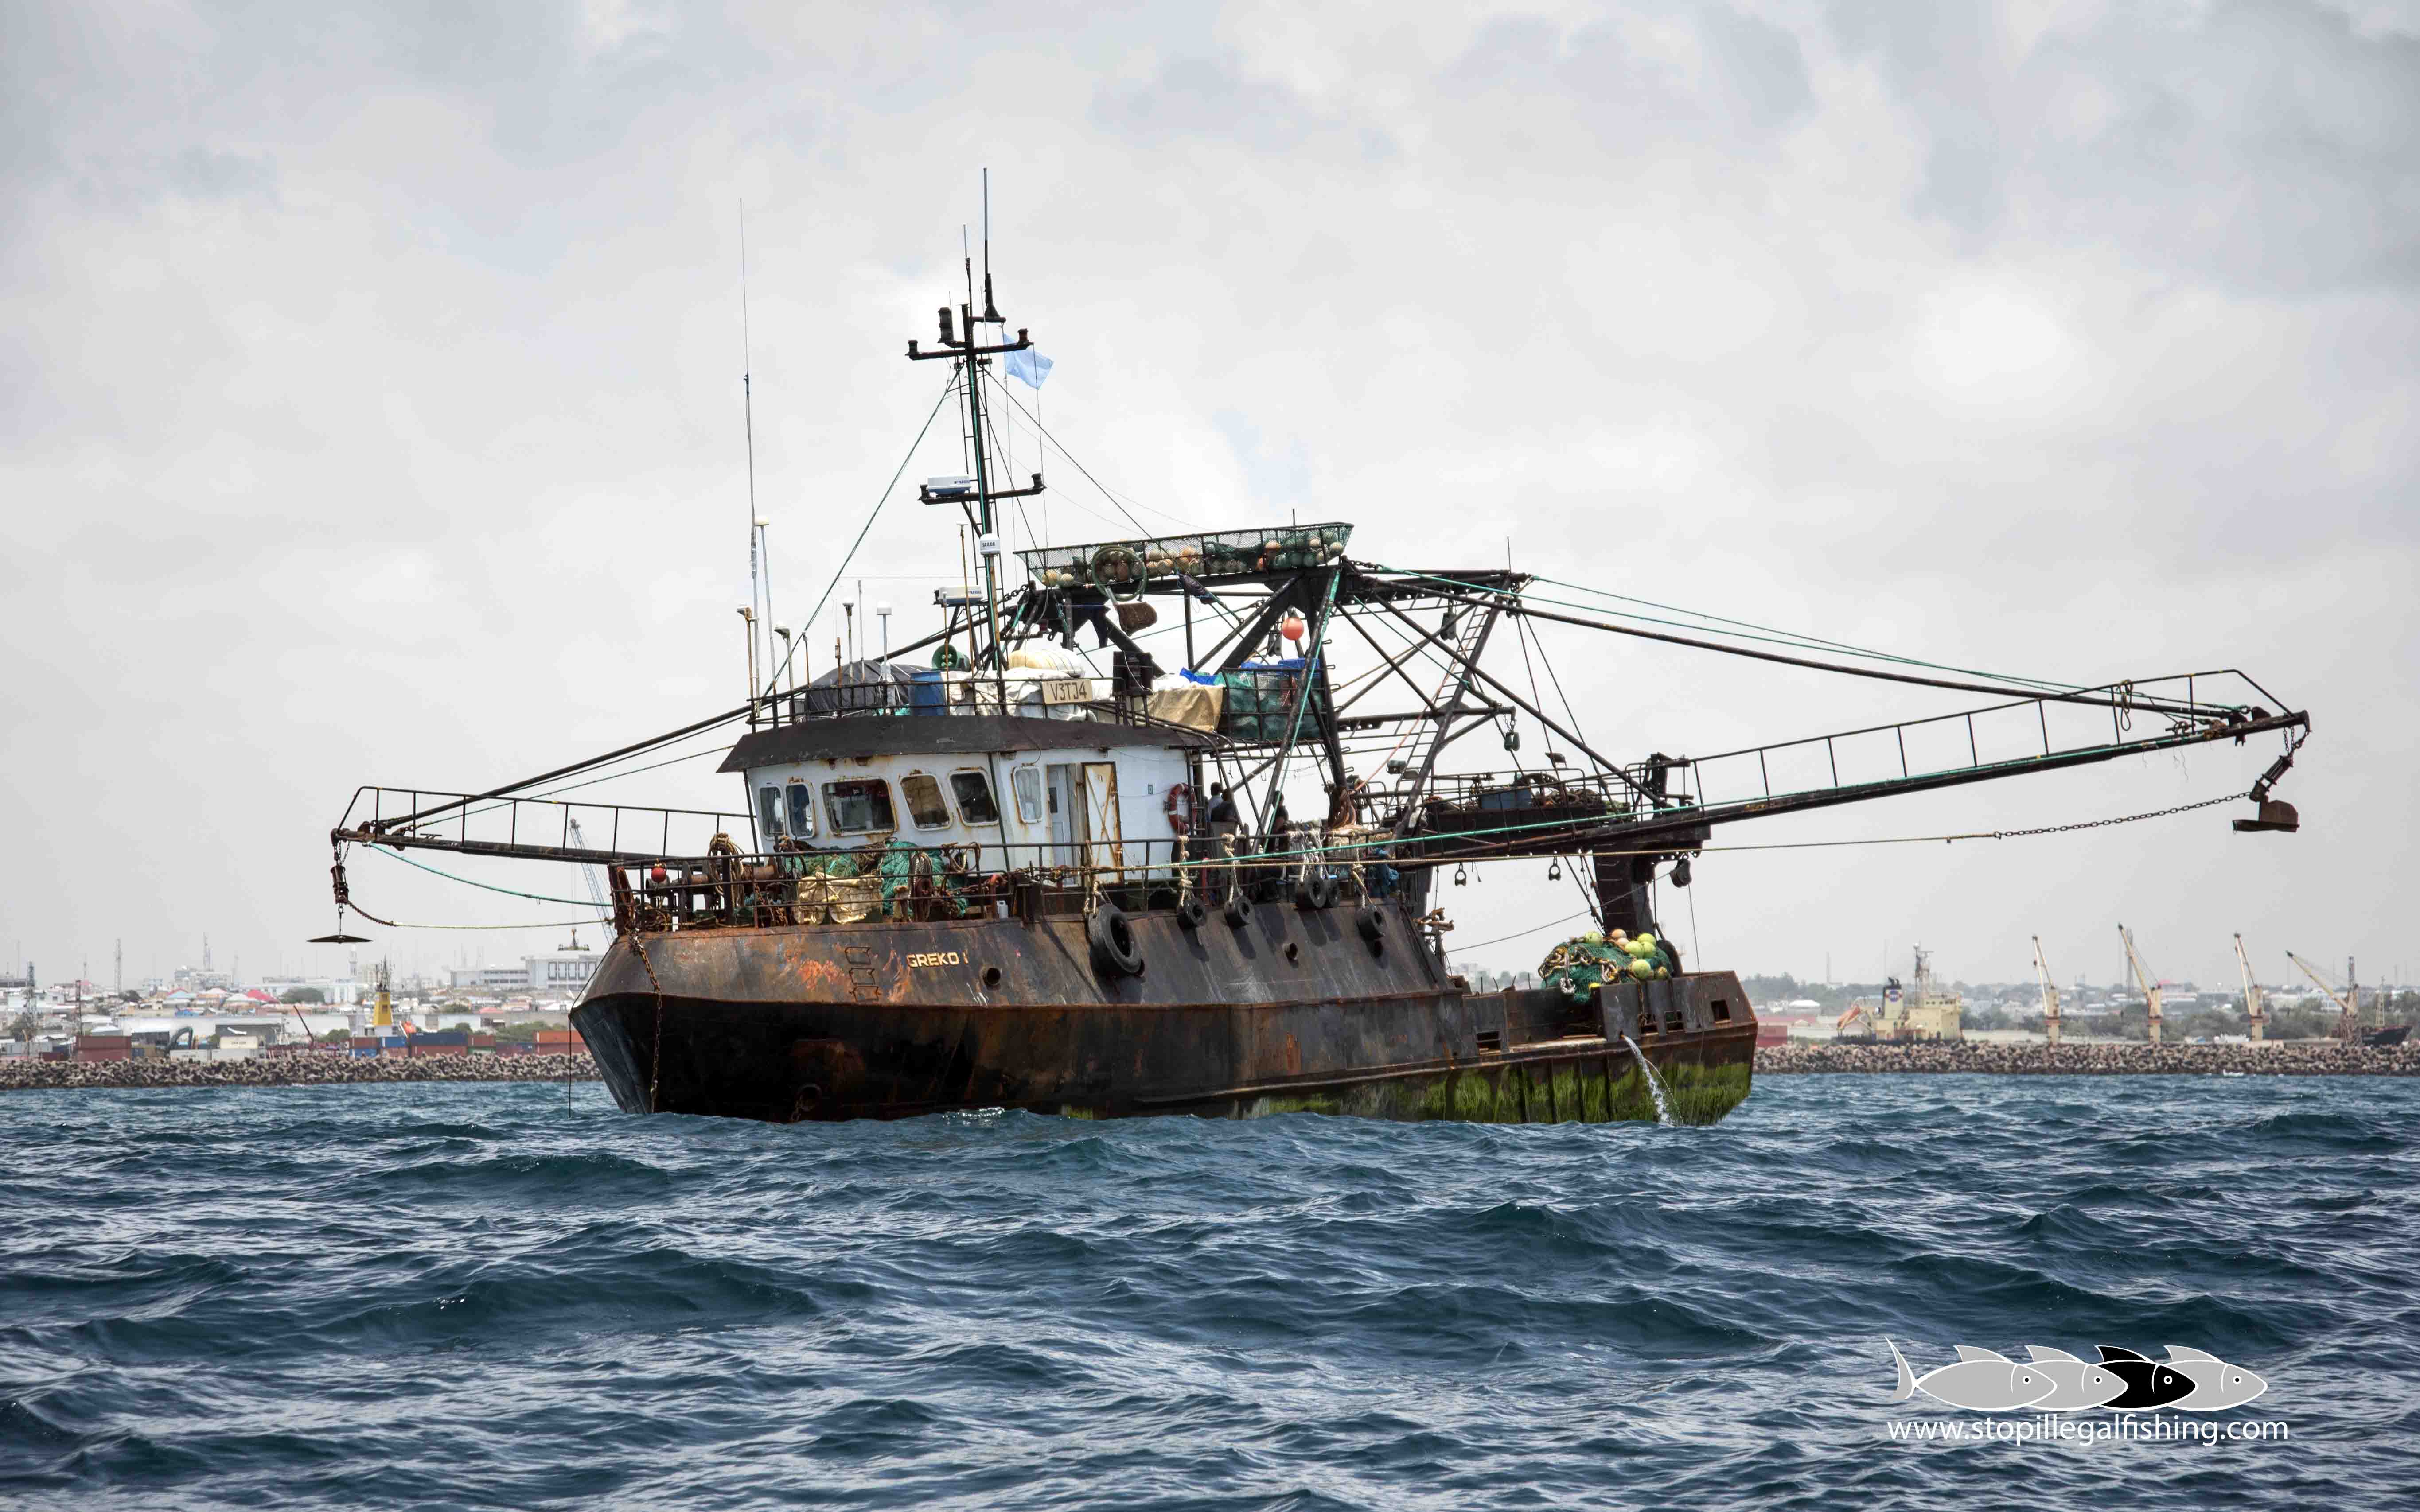 FISH-i Africa assists Somali authorities inspect suspected illegal fishing vessel, Greko 1